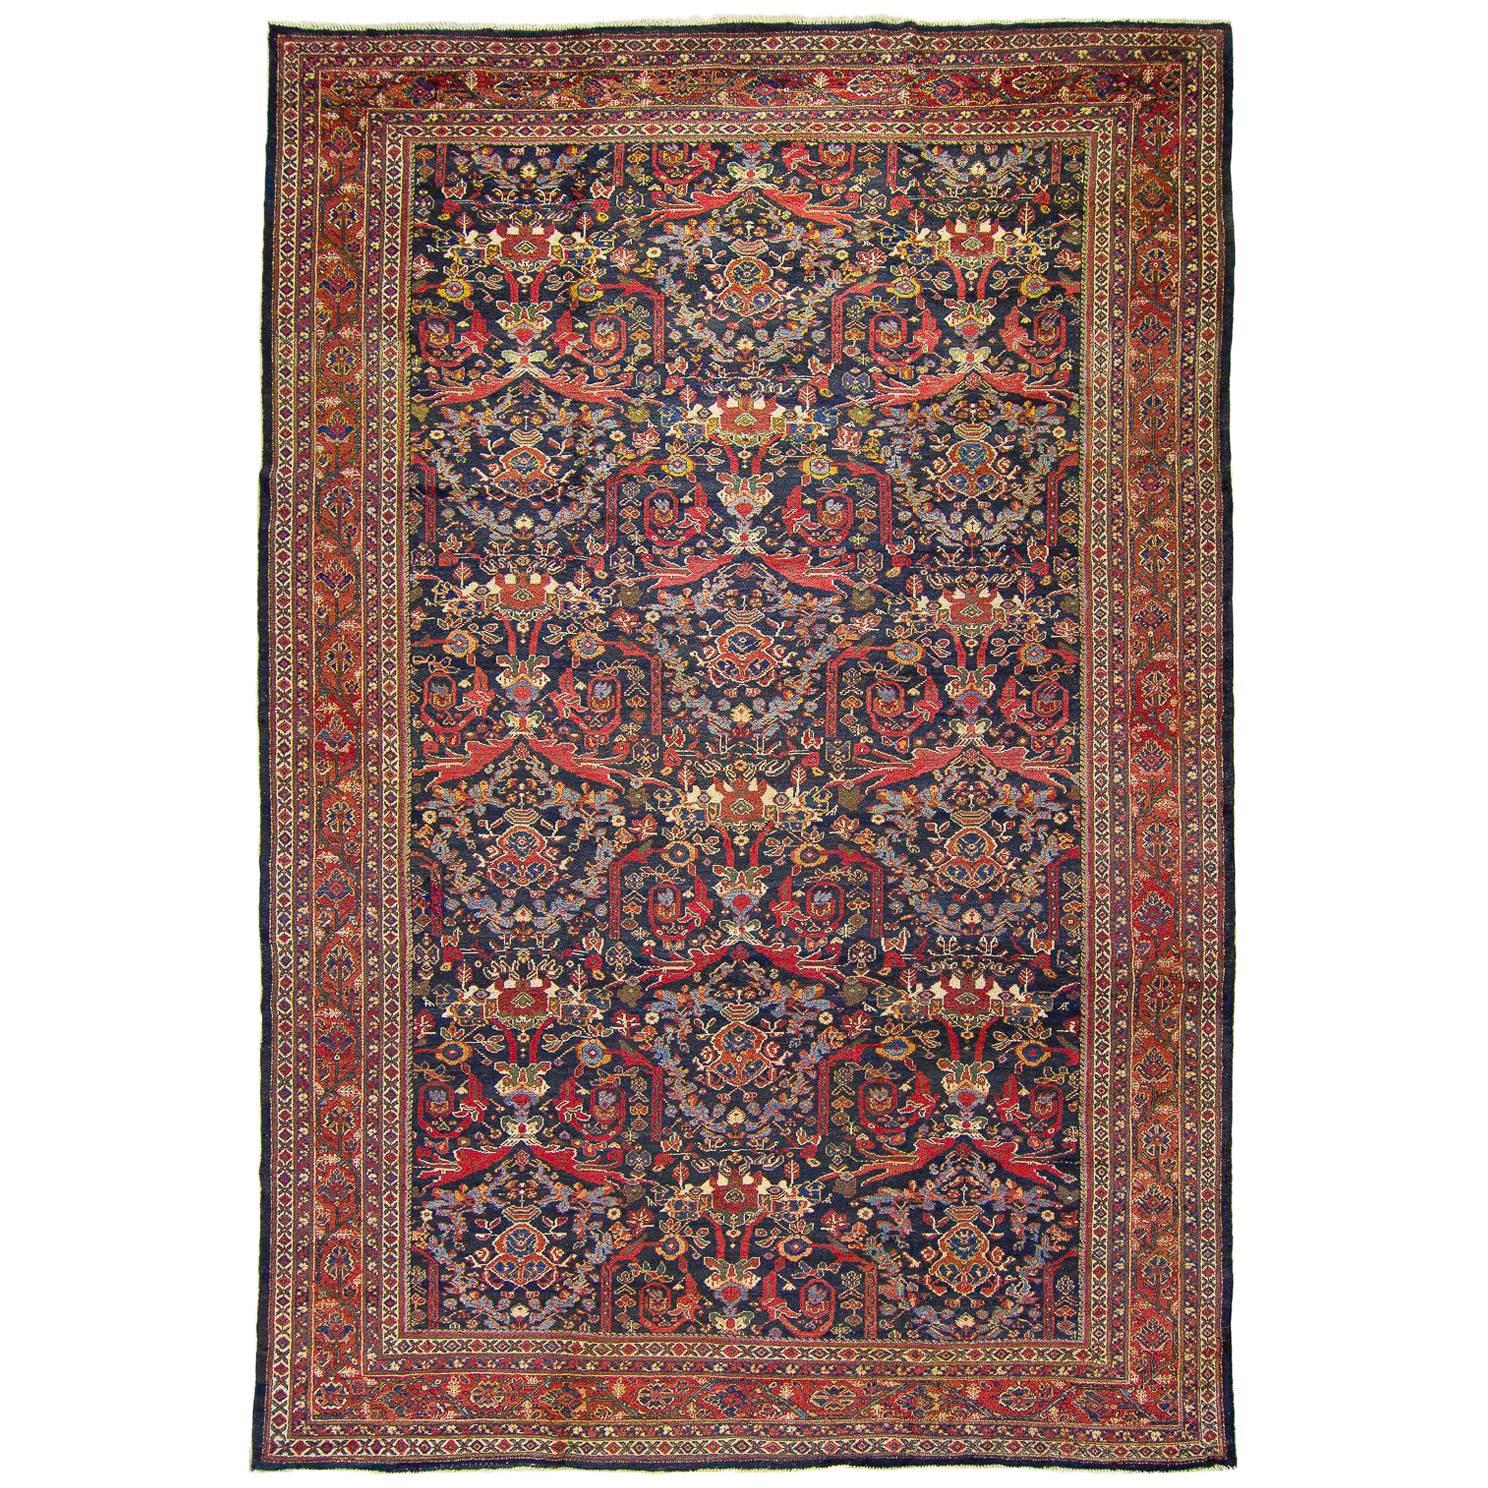 Antique Mostafi Designed Navy Mahal Carpet  For Sale